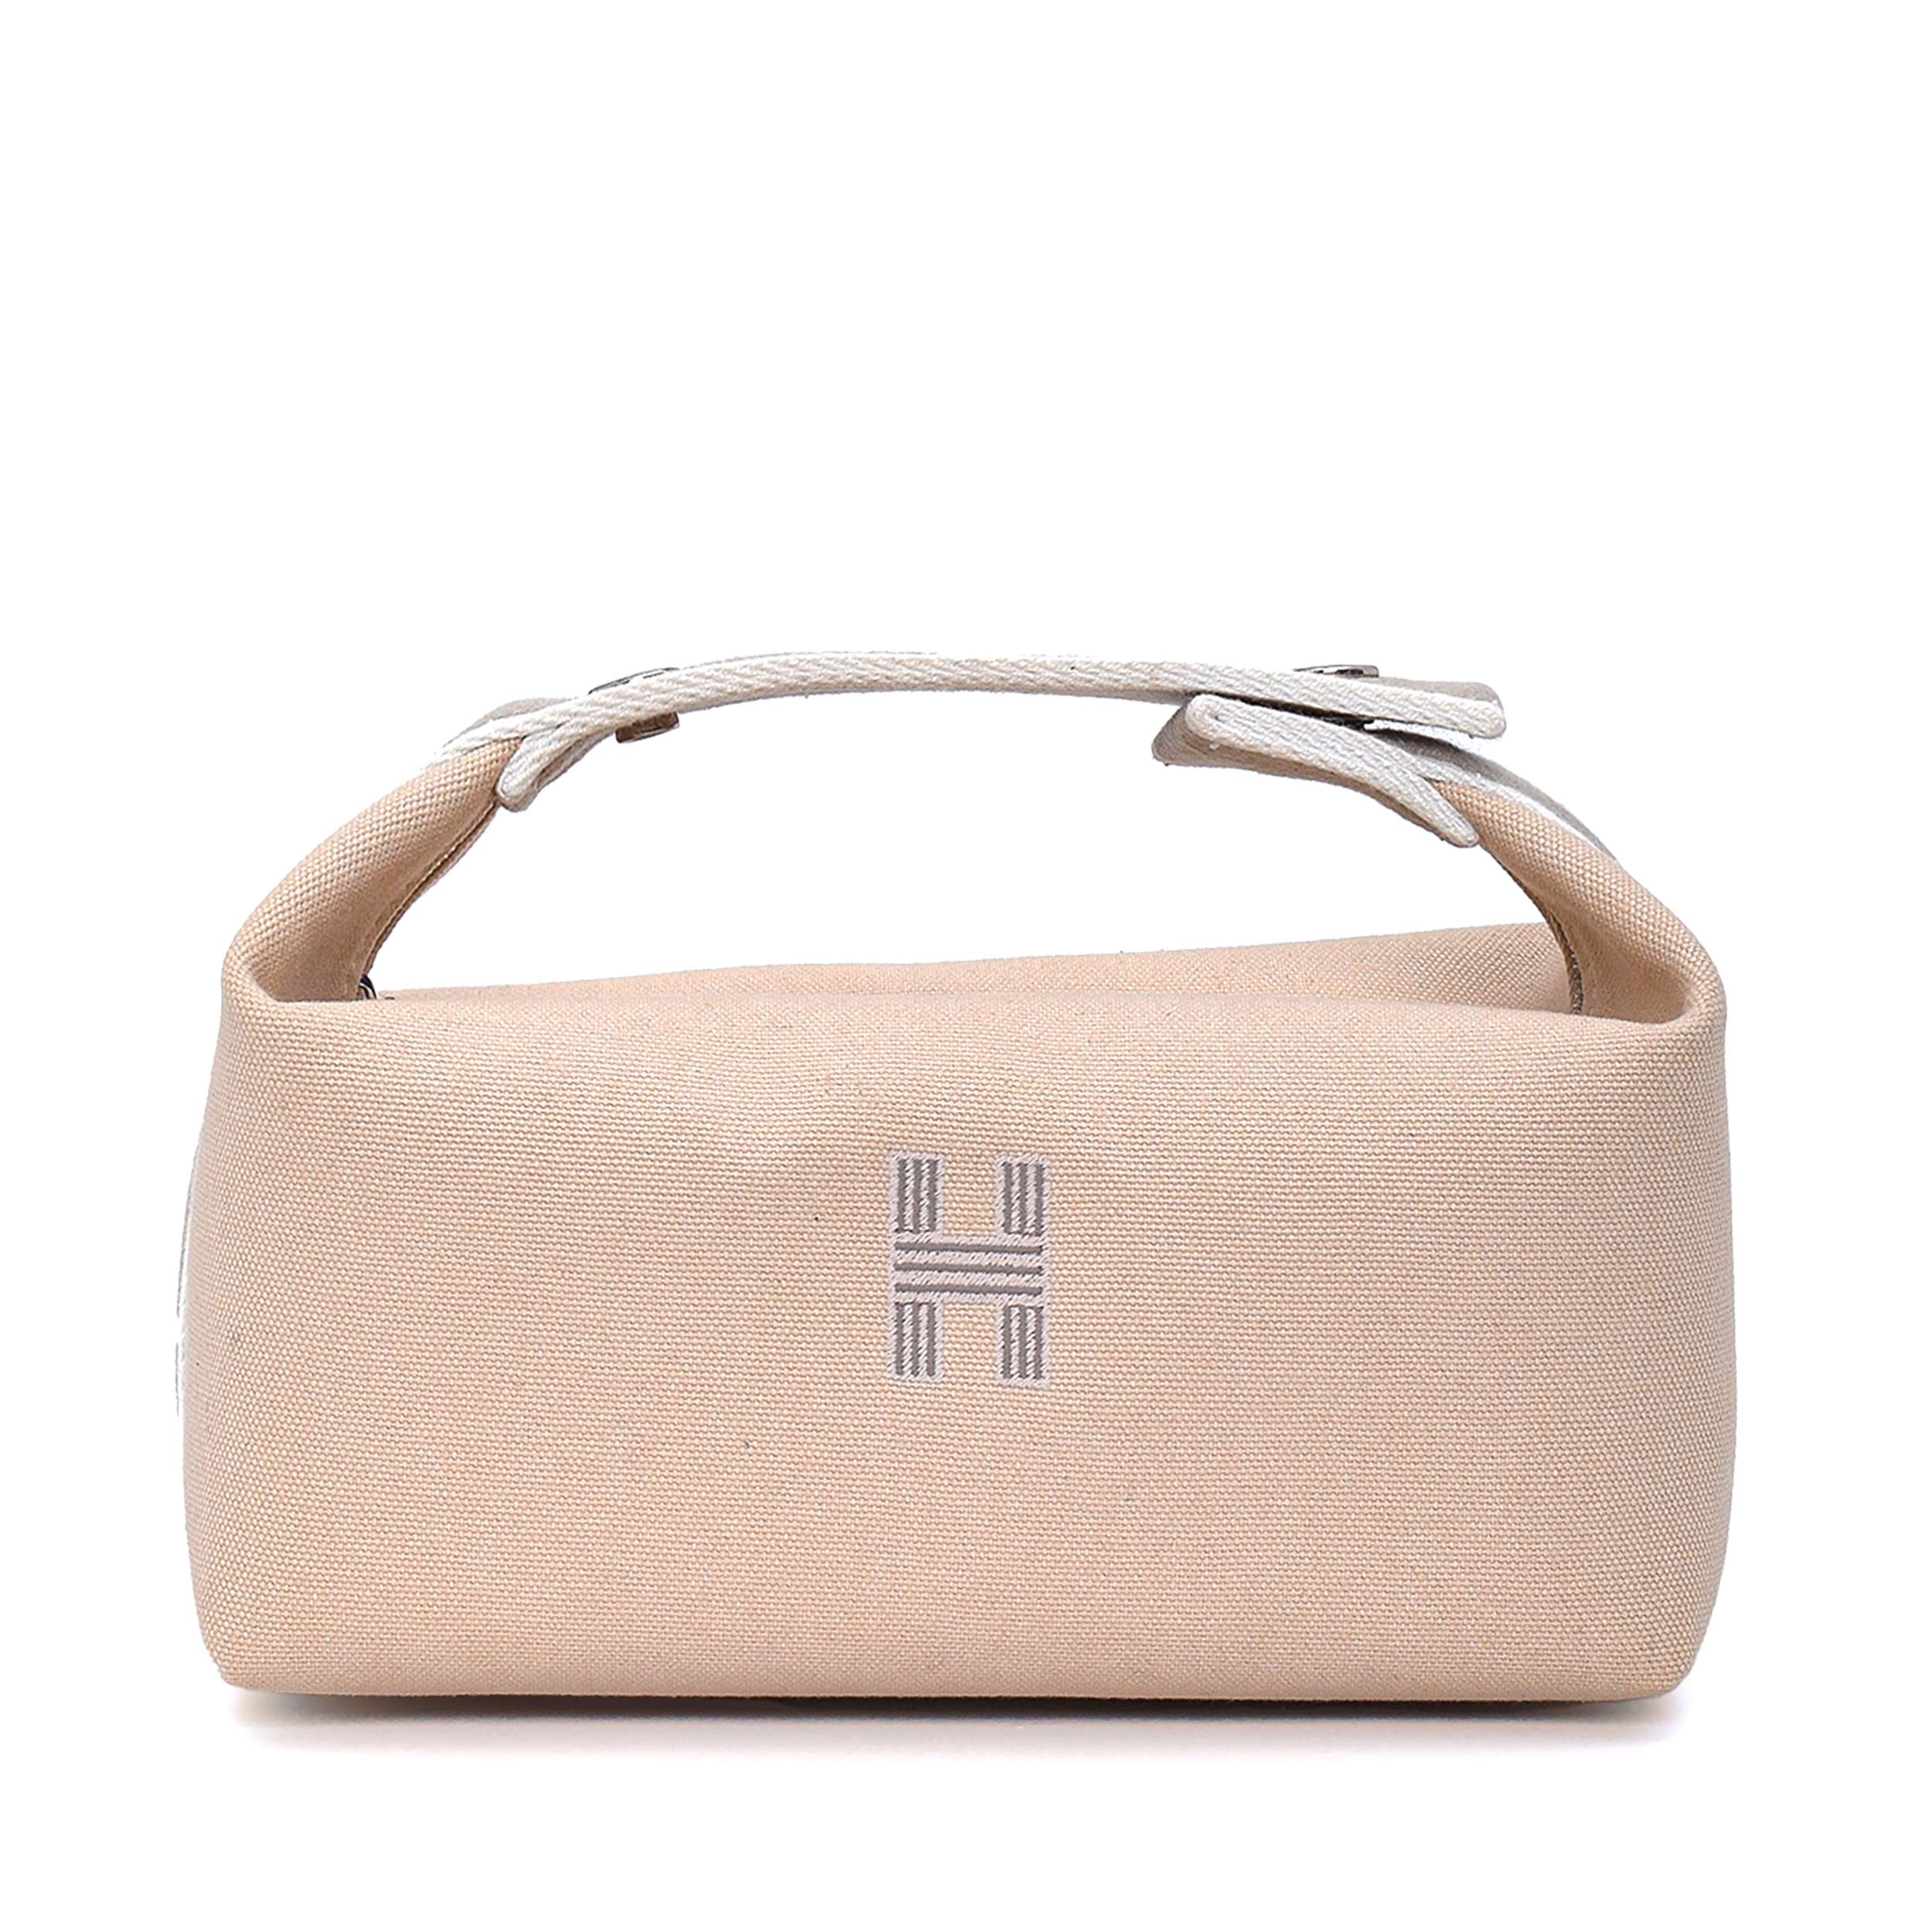 Hermes - Beige & White Canvas Small Bride Case Bag